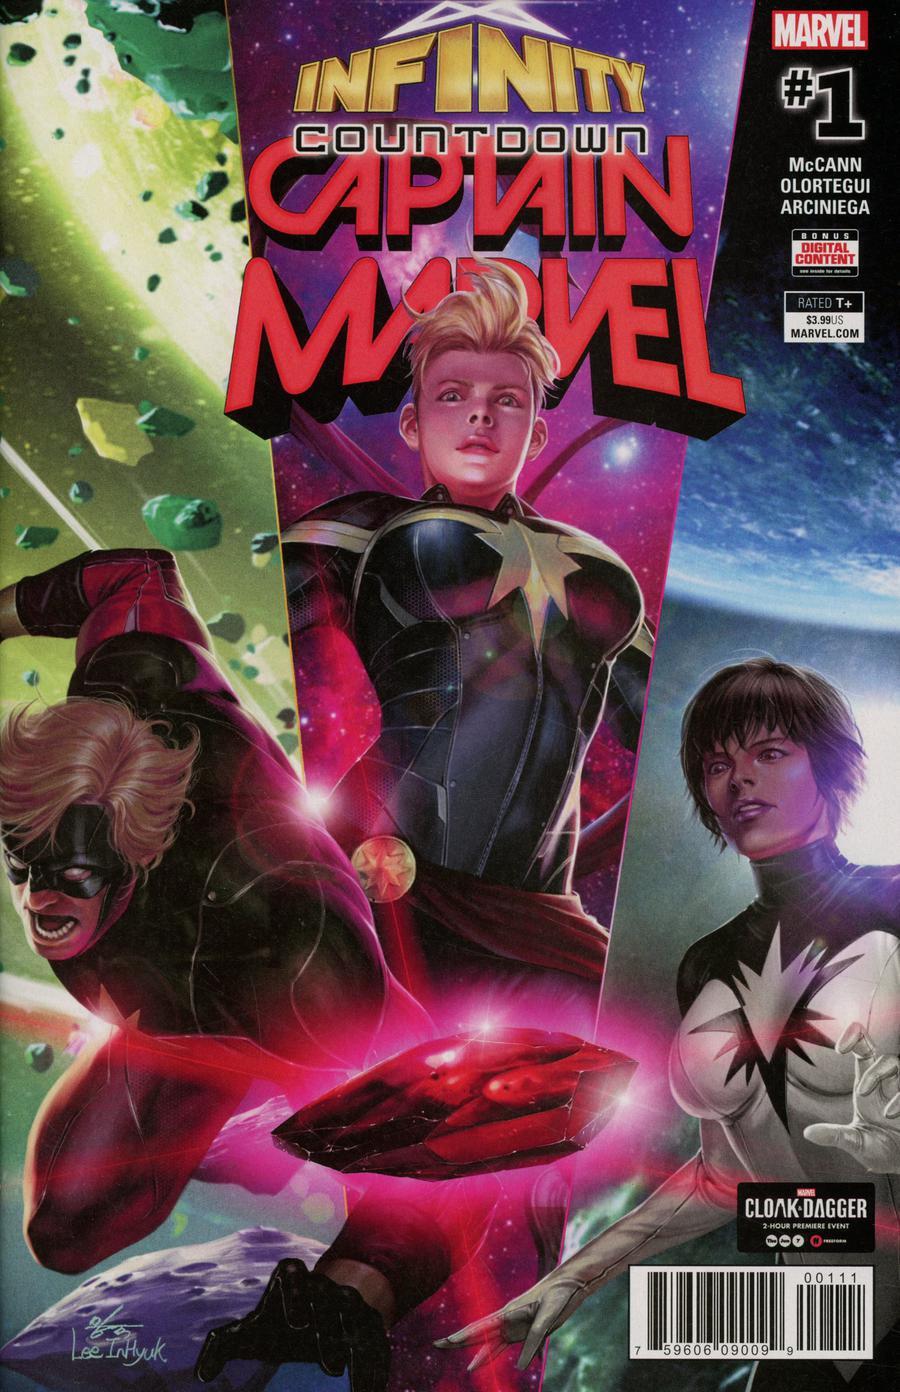 Infinity Countdown Captain Marvel Vol. 1 #1